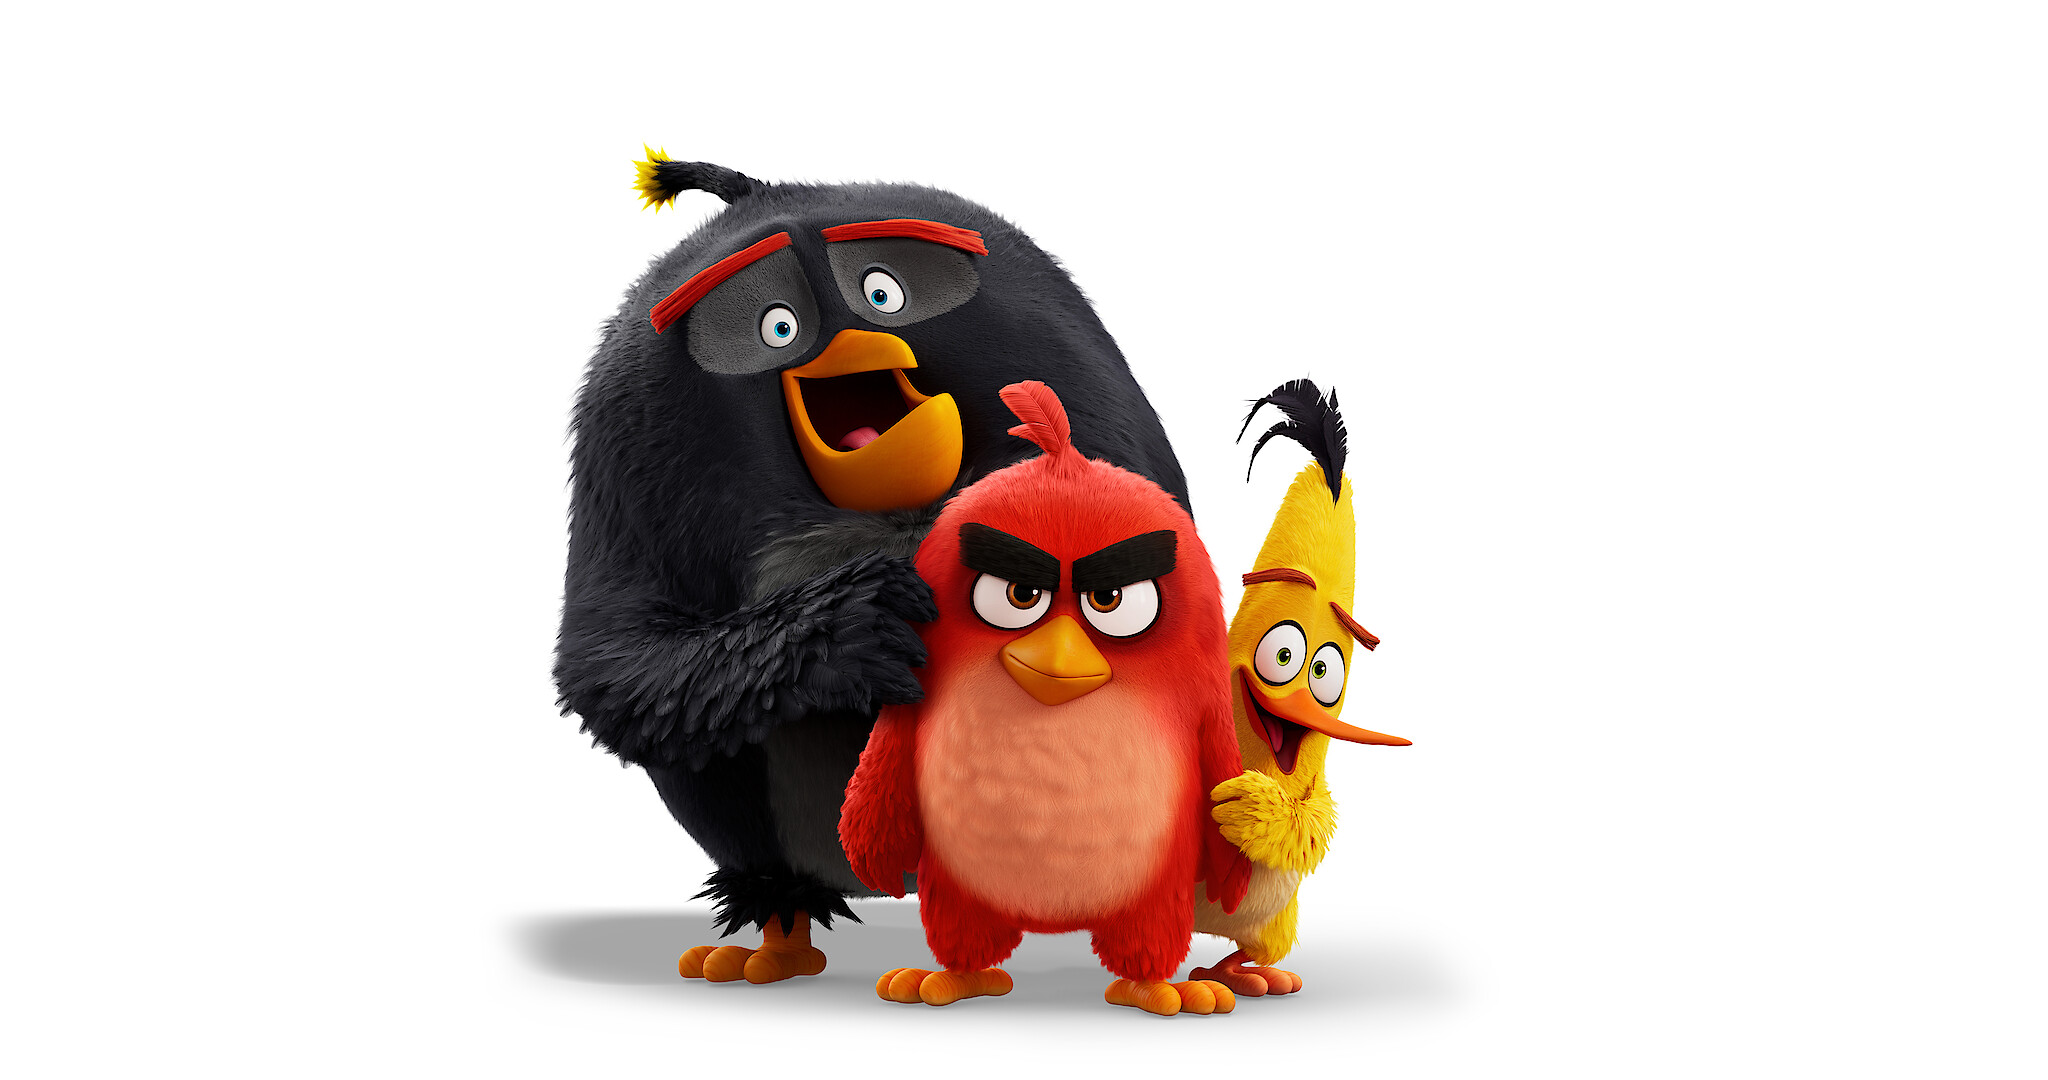 Angry Birds Bubble Trouble' Season 2 Premieres December 10